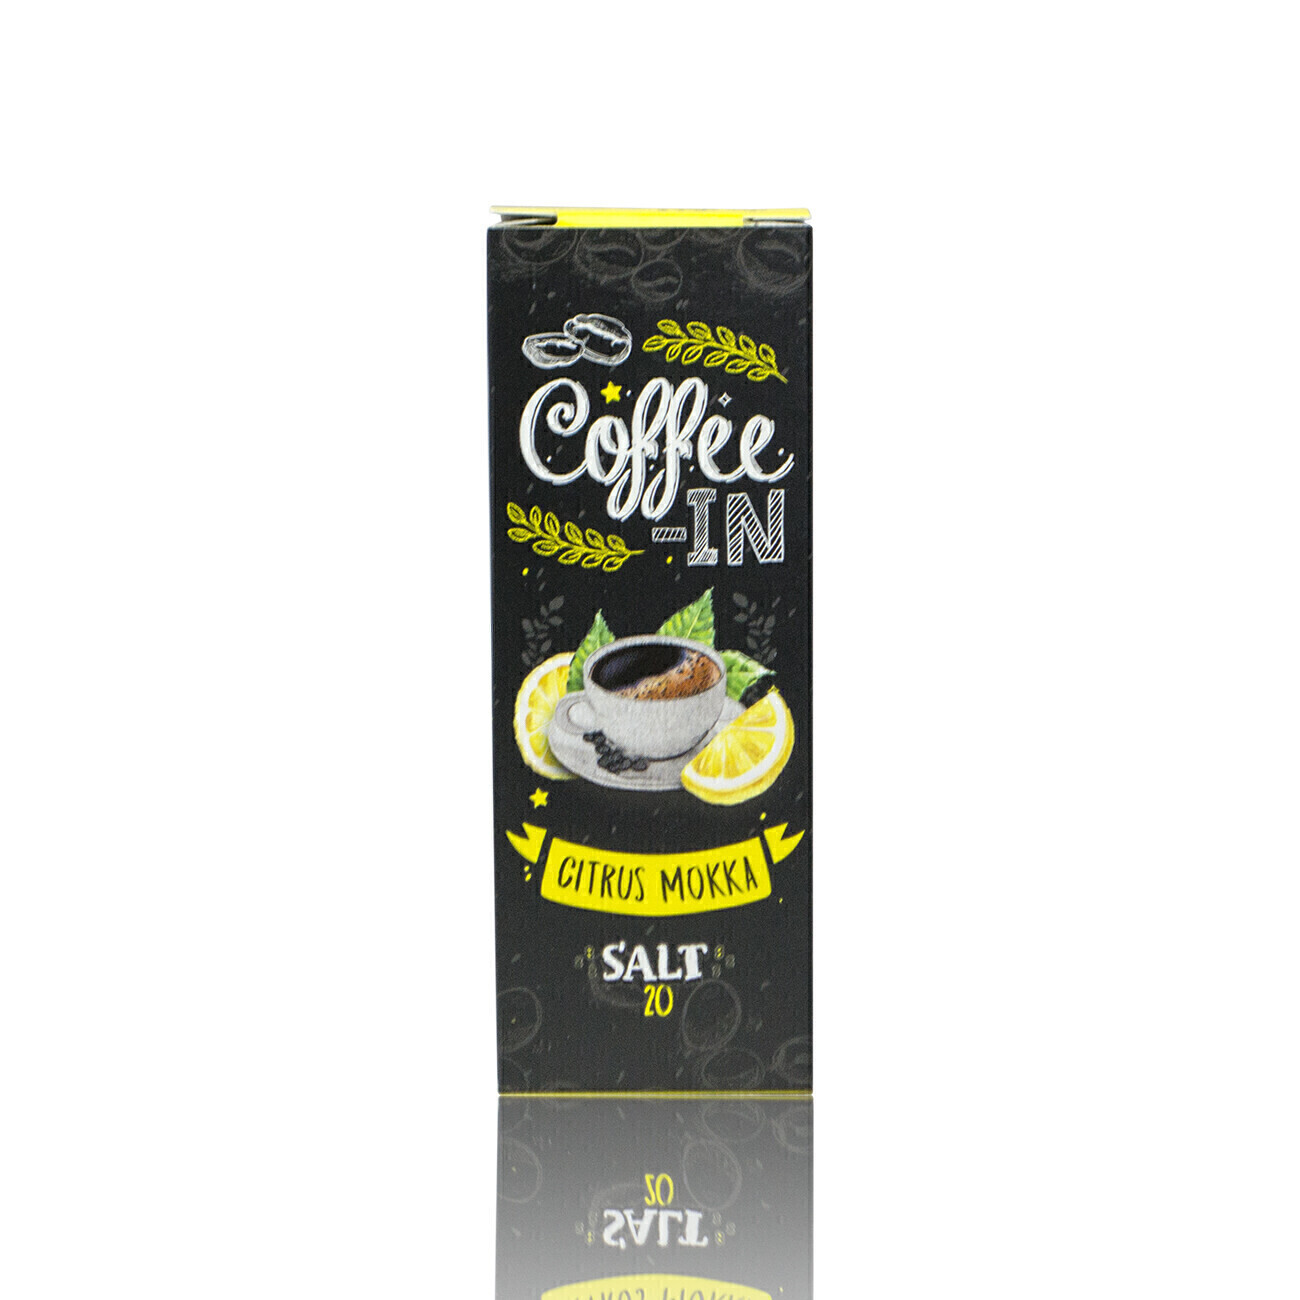 COFFEE-IN SALT: CITRUS MOKKA 20MG STRONG